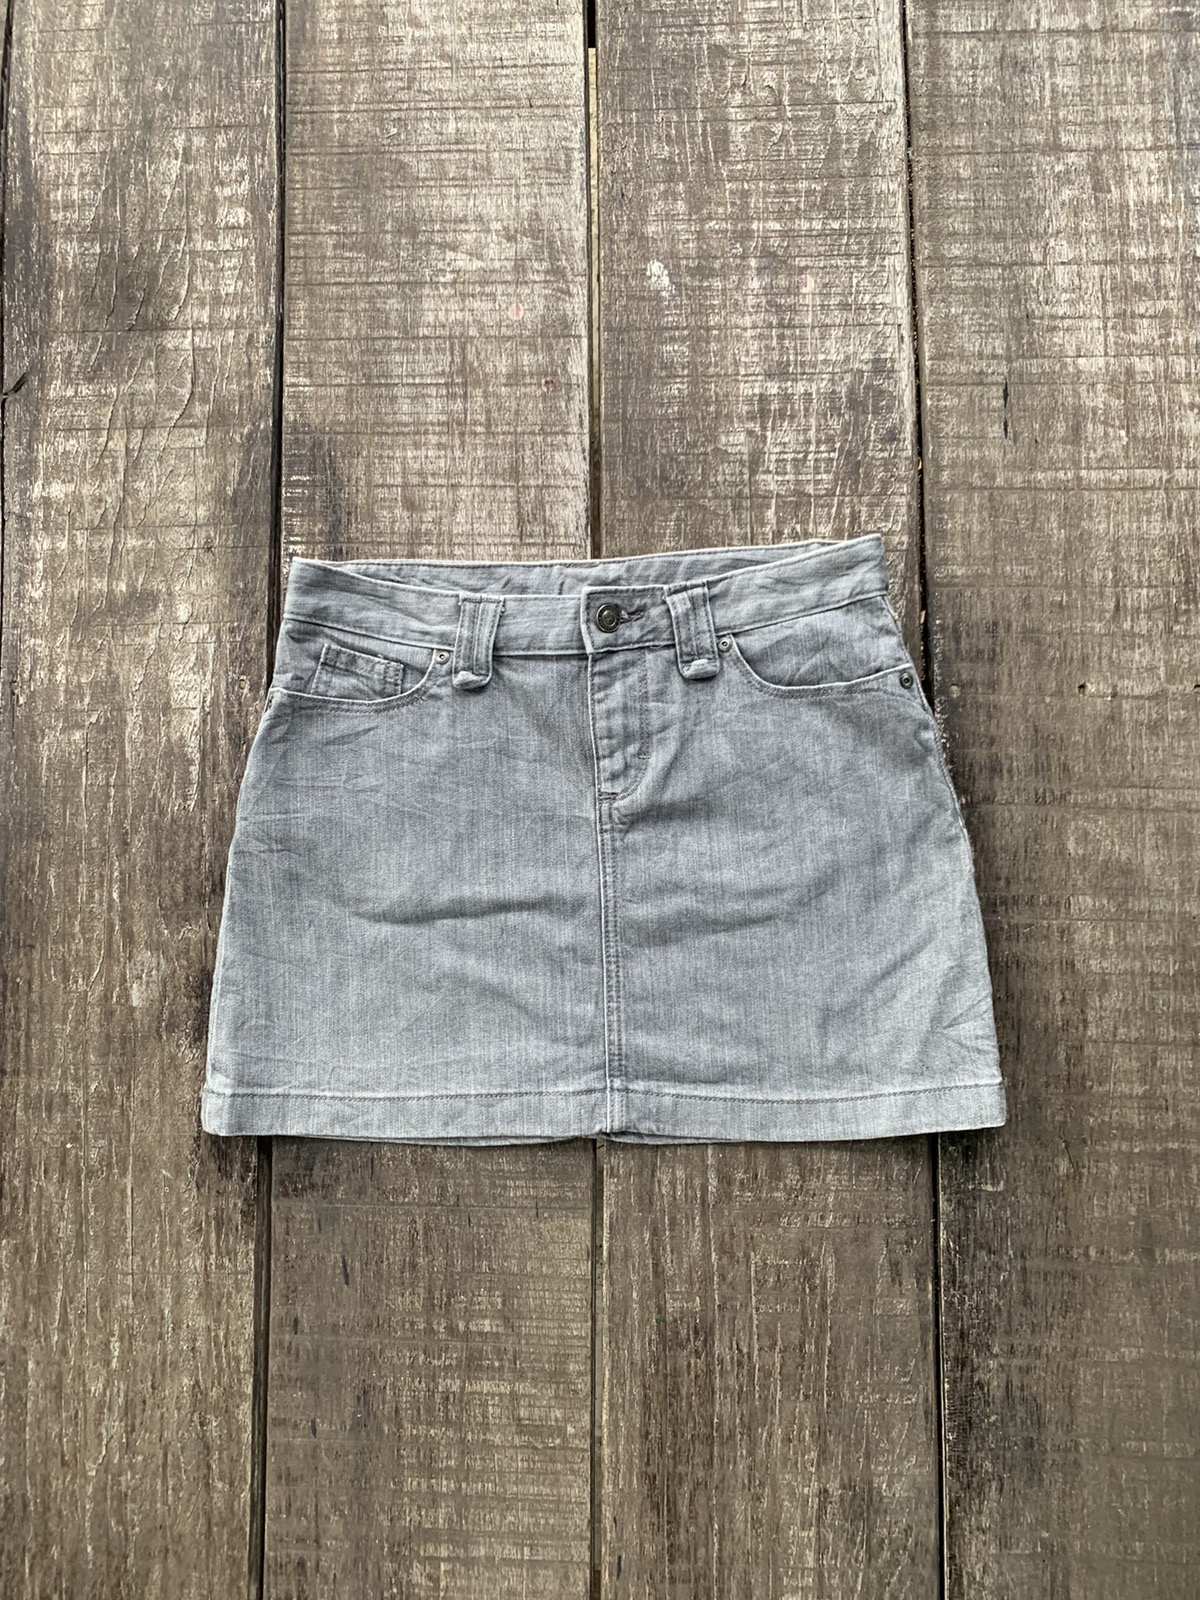 Patagonia jeans mini skirt - 1